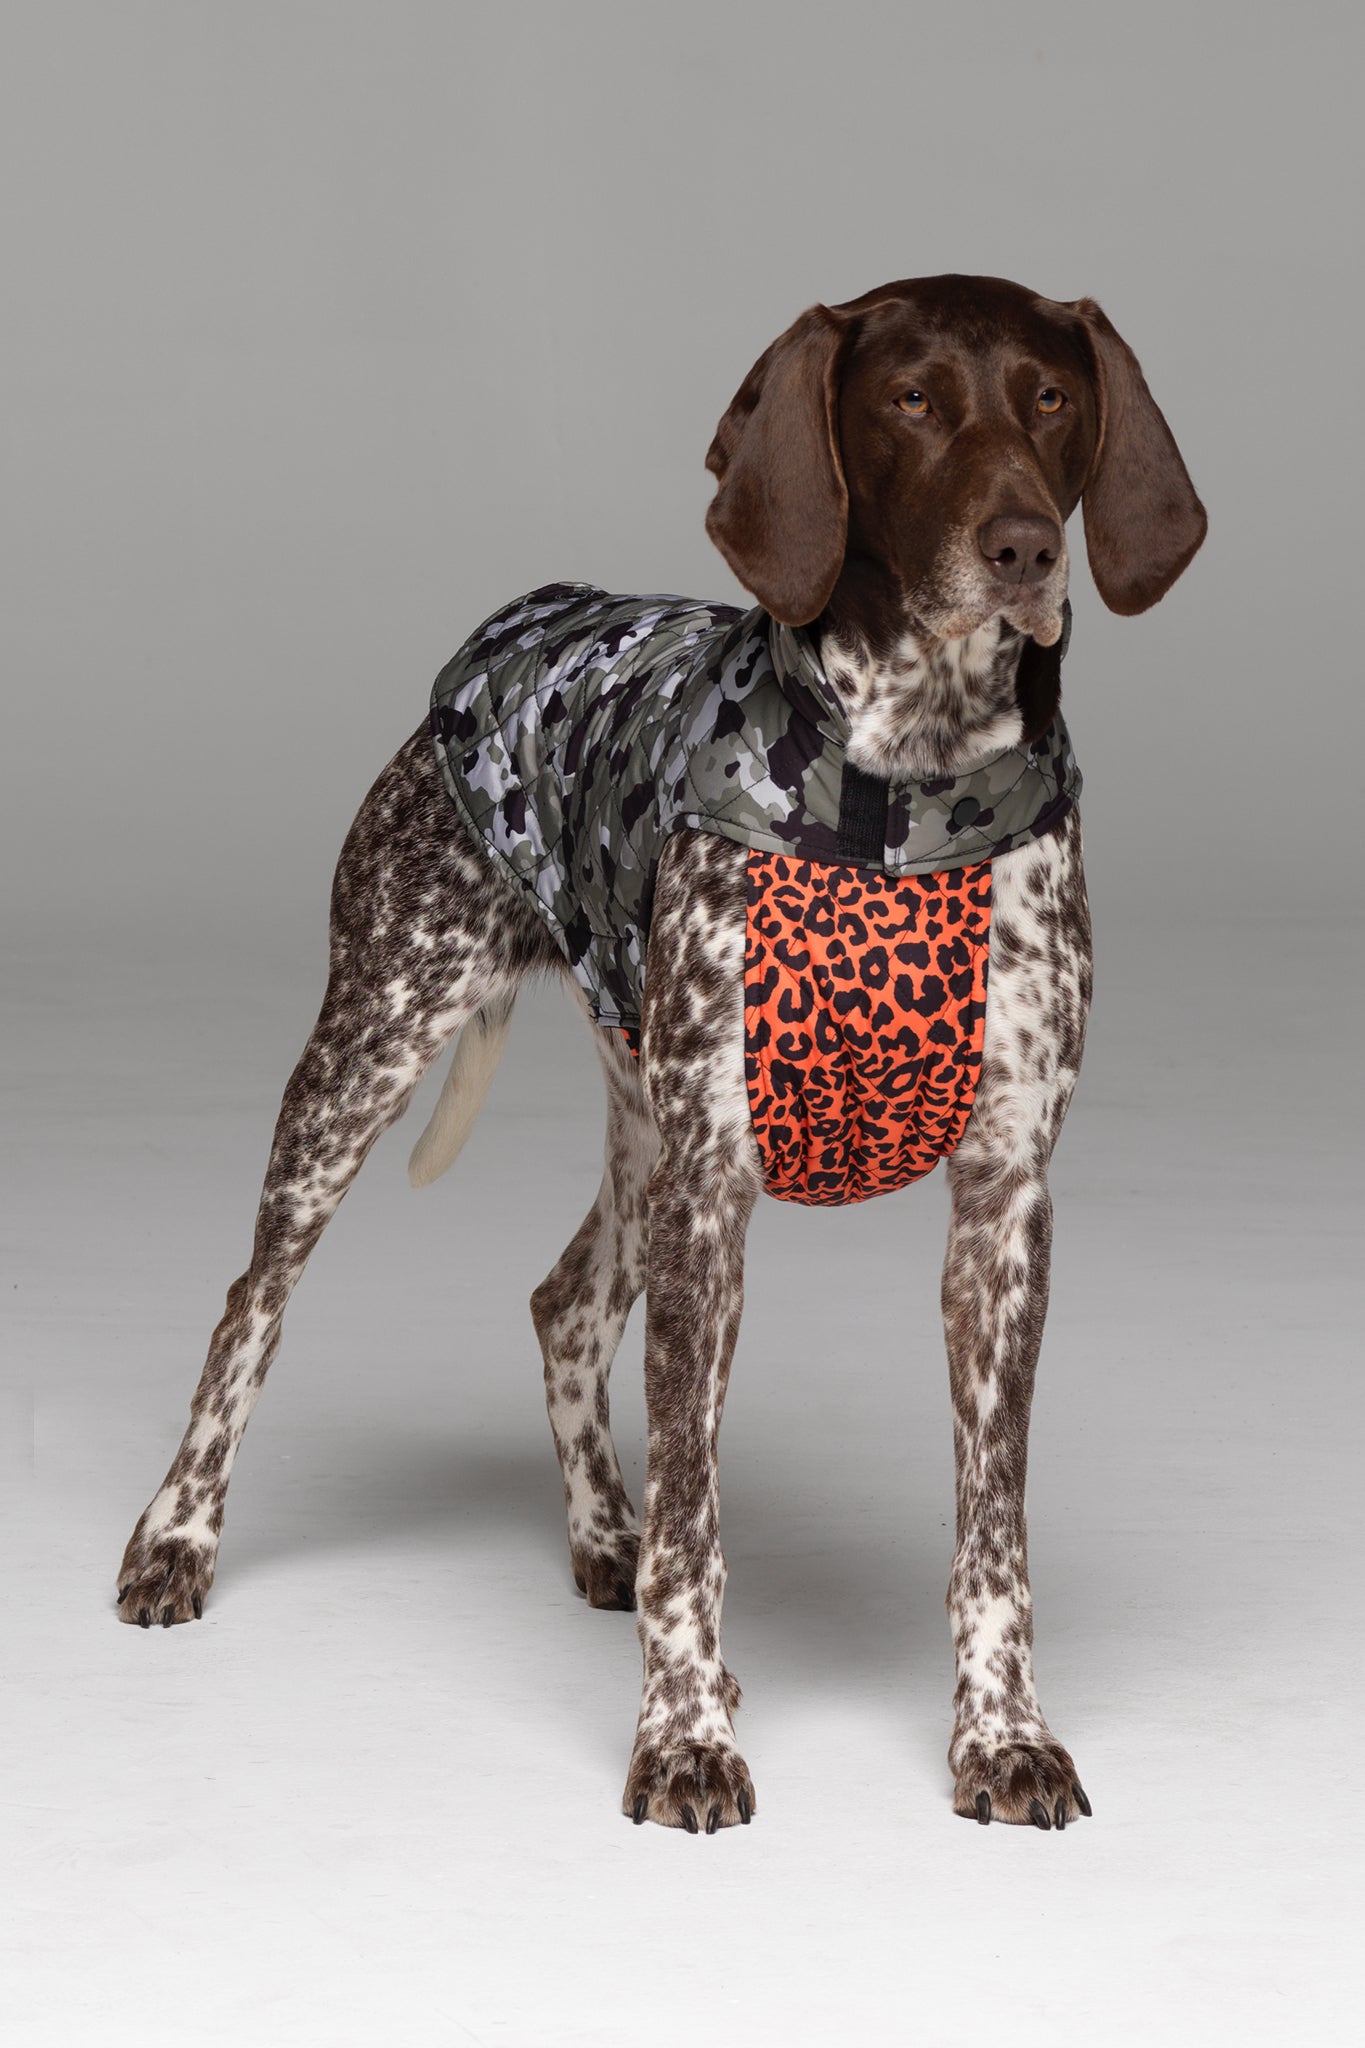 Foxtrot Dog Jacket in Camo Print, with vibrant orange animal print bodice.